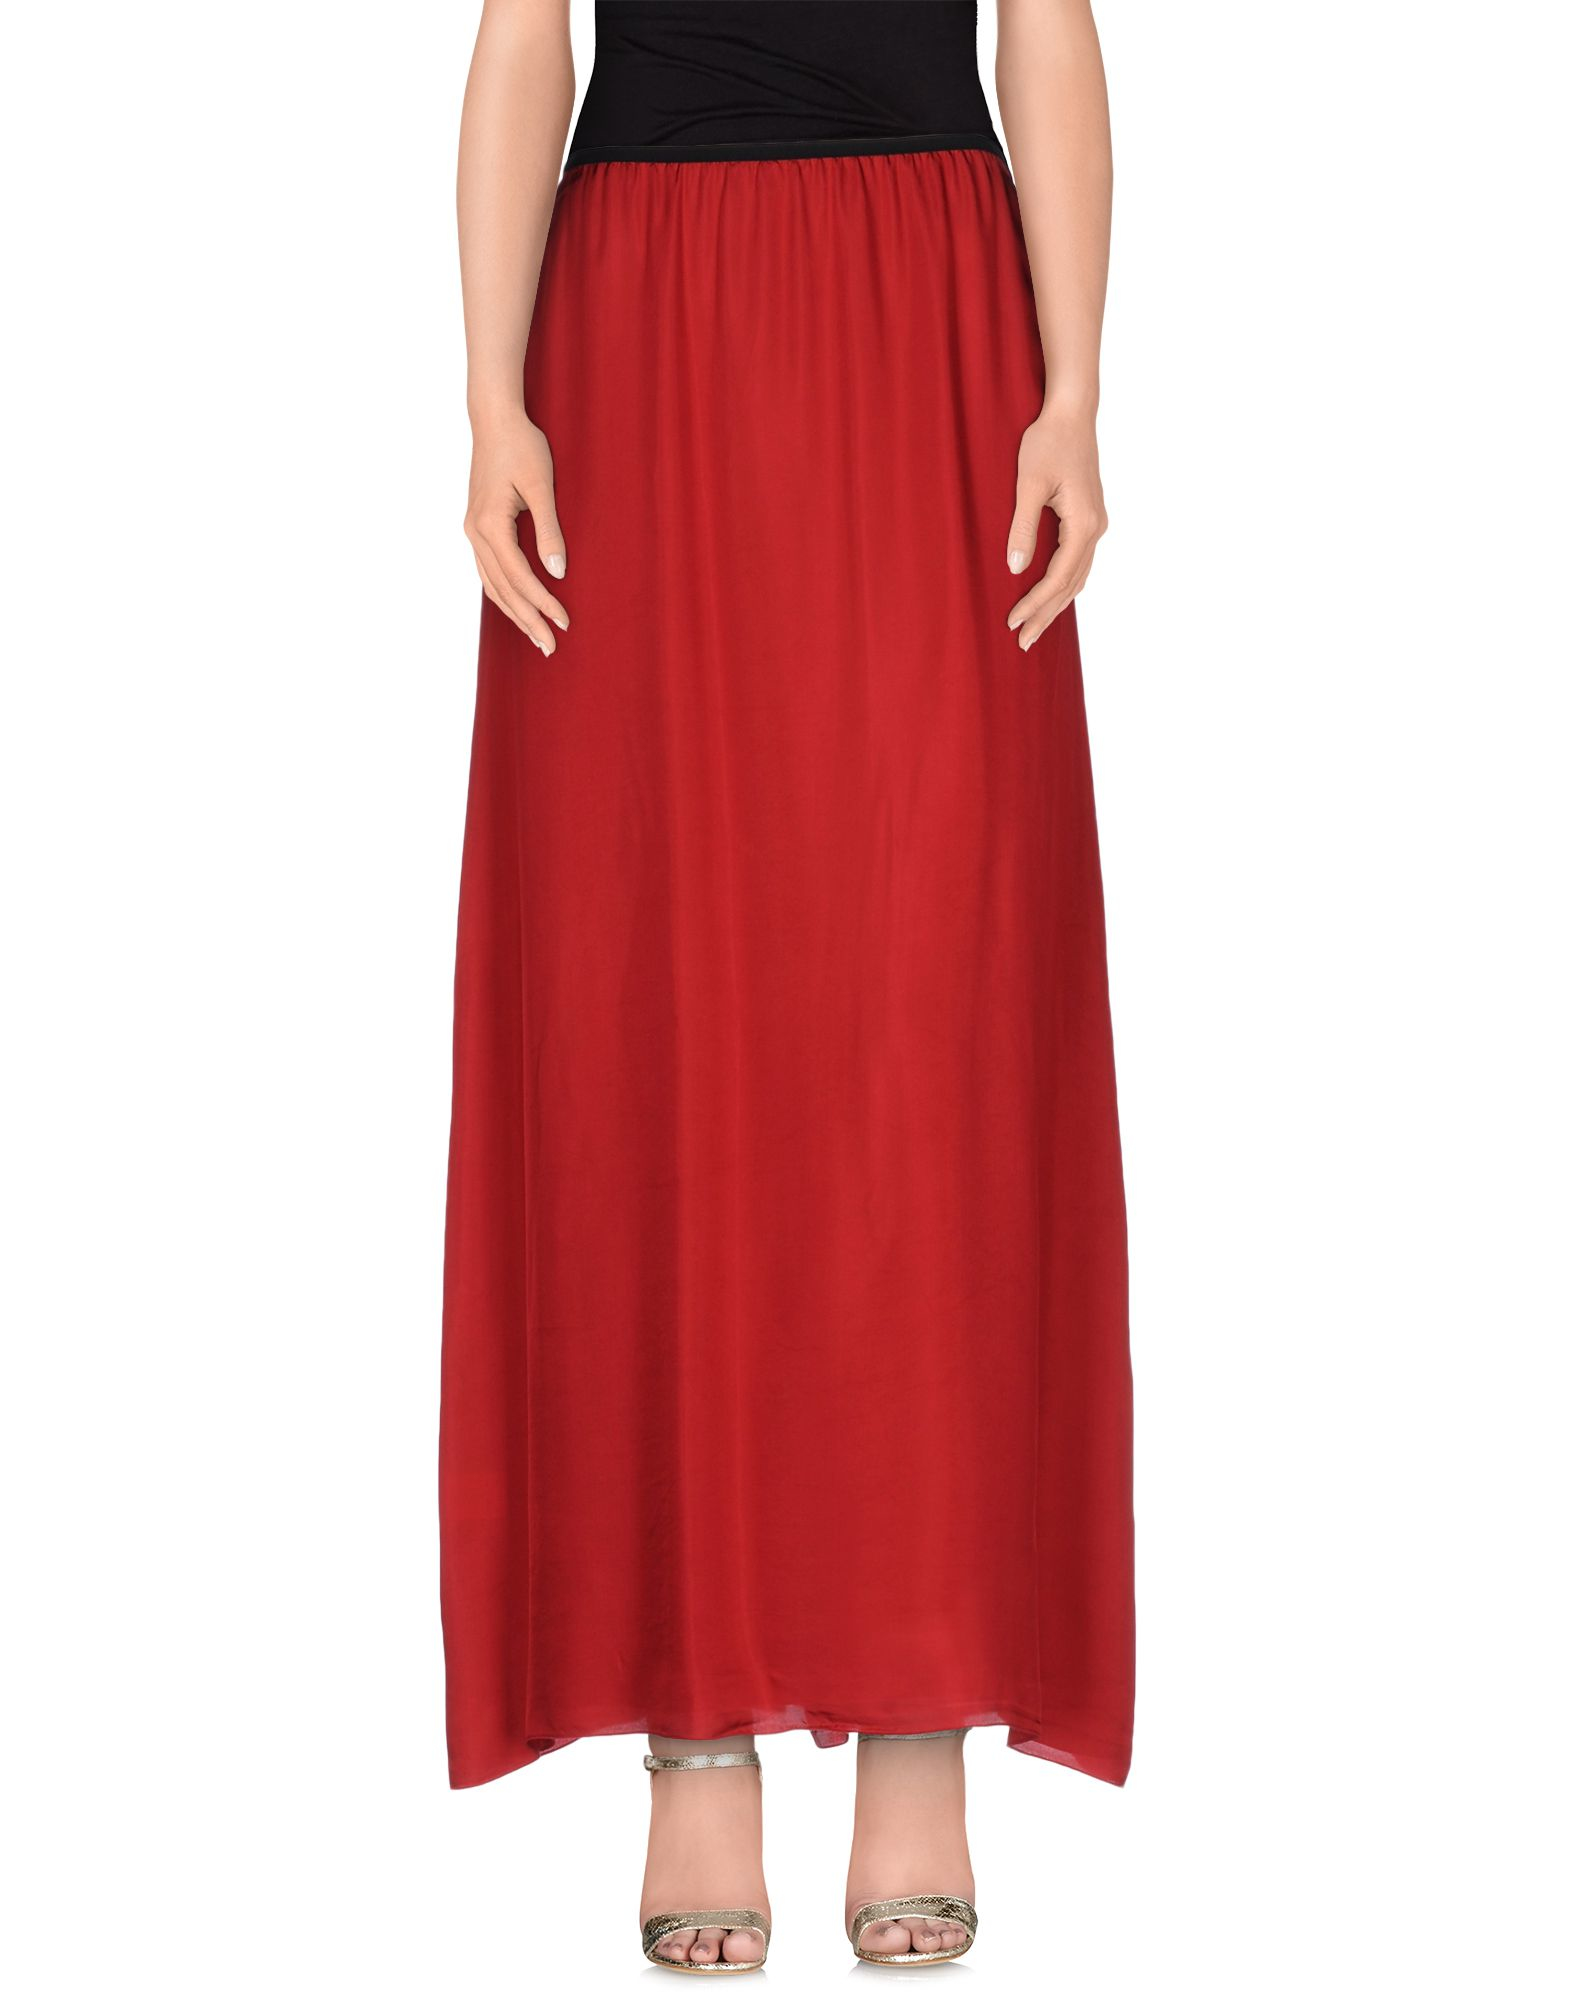 Lyst - Manila Grace Long Skirt in Red